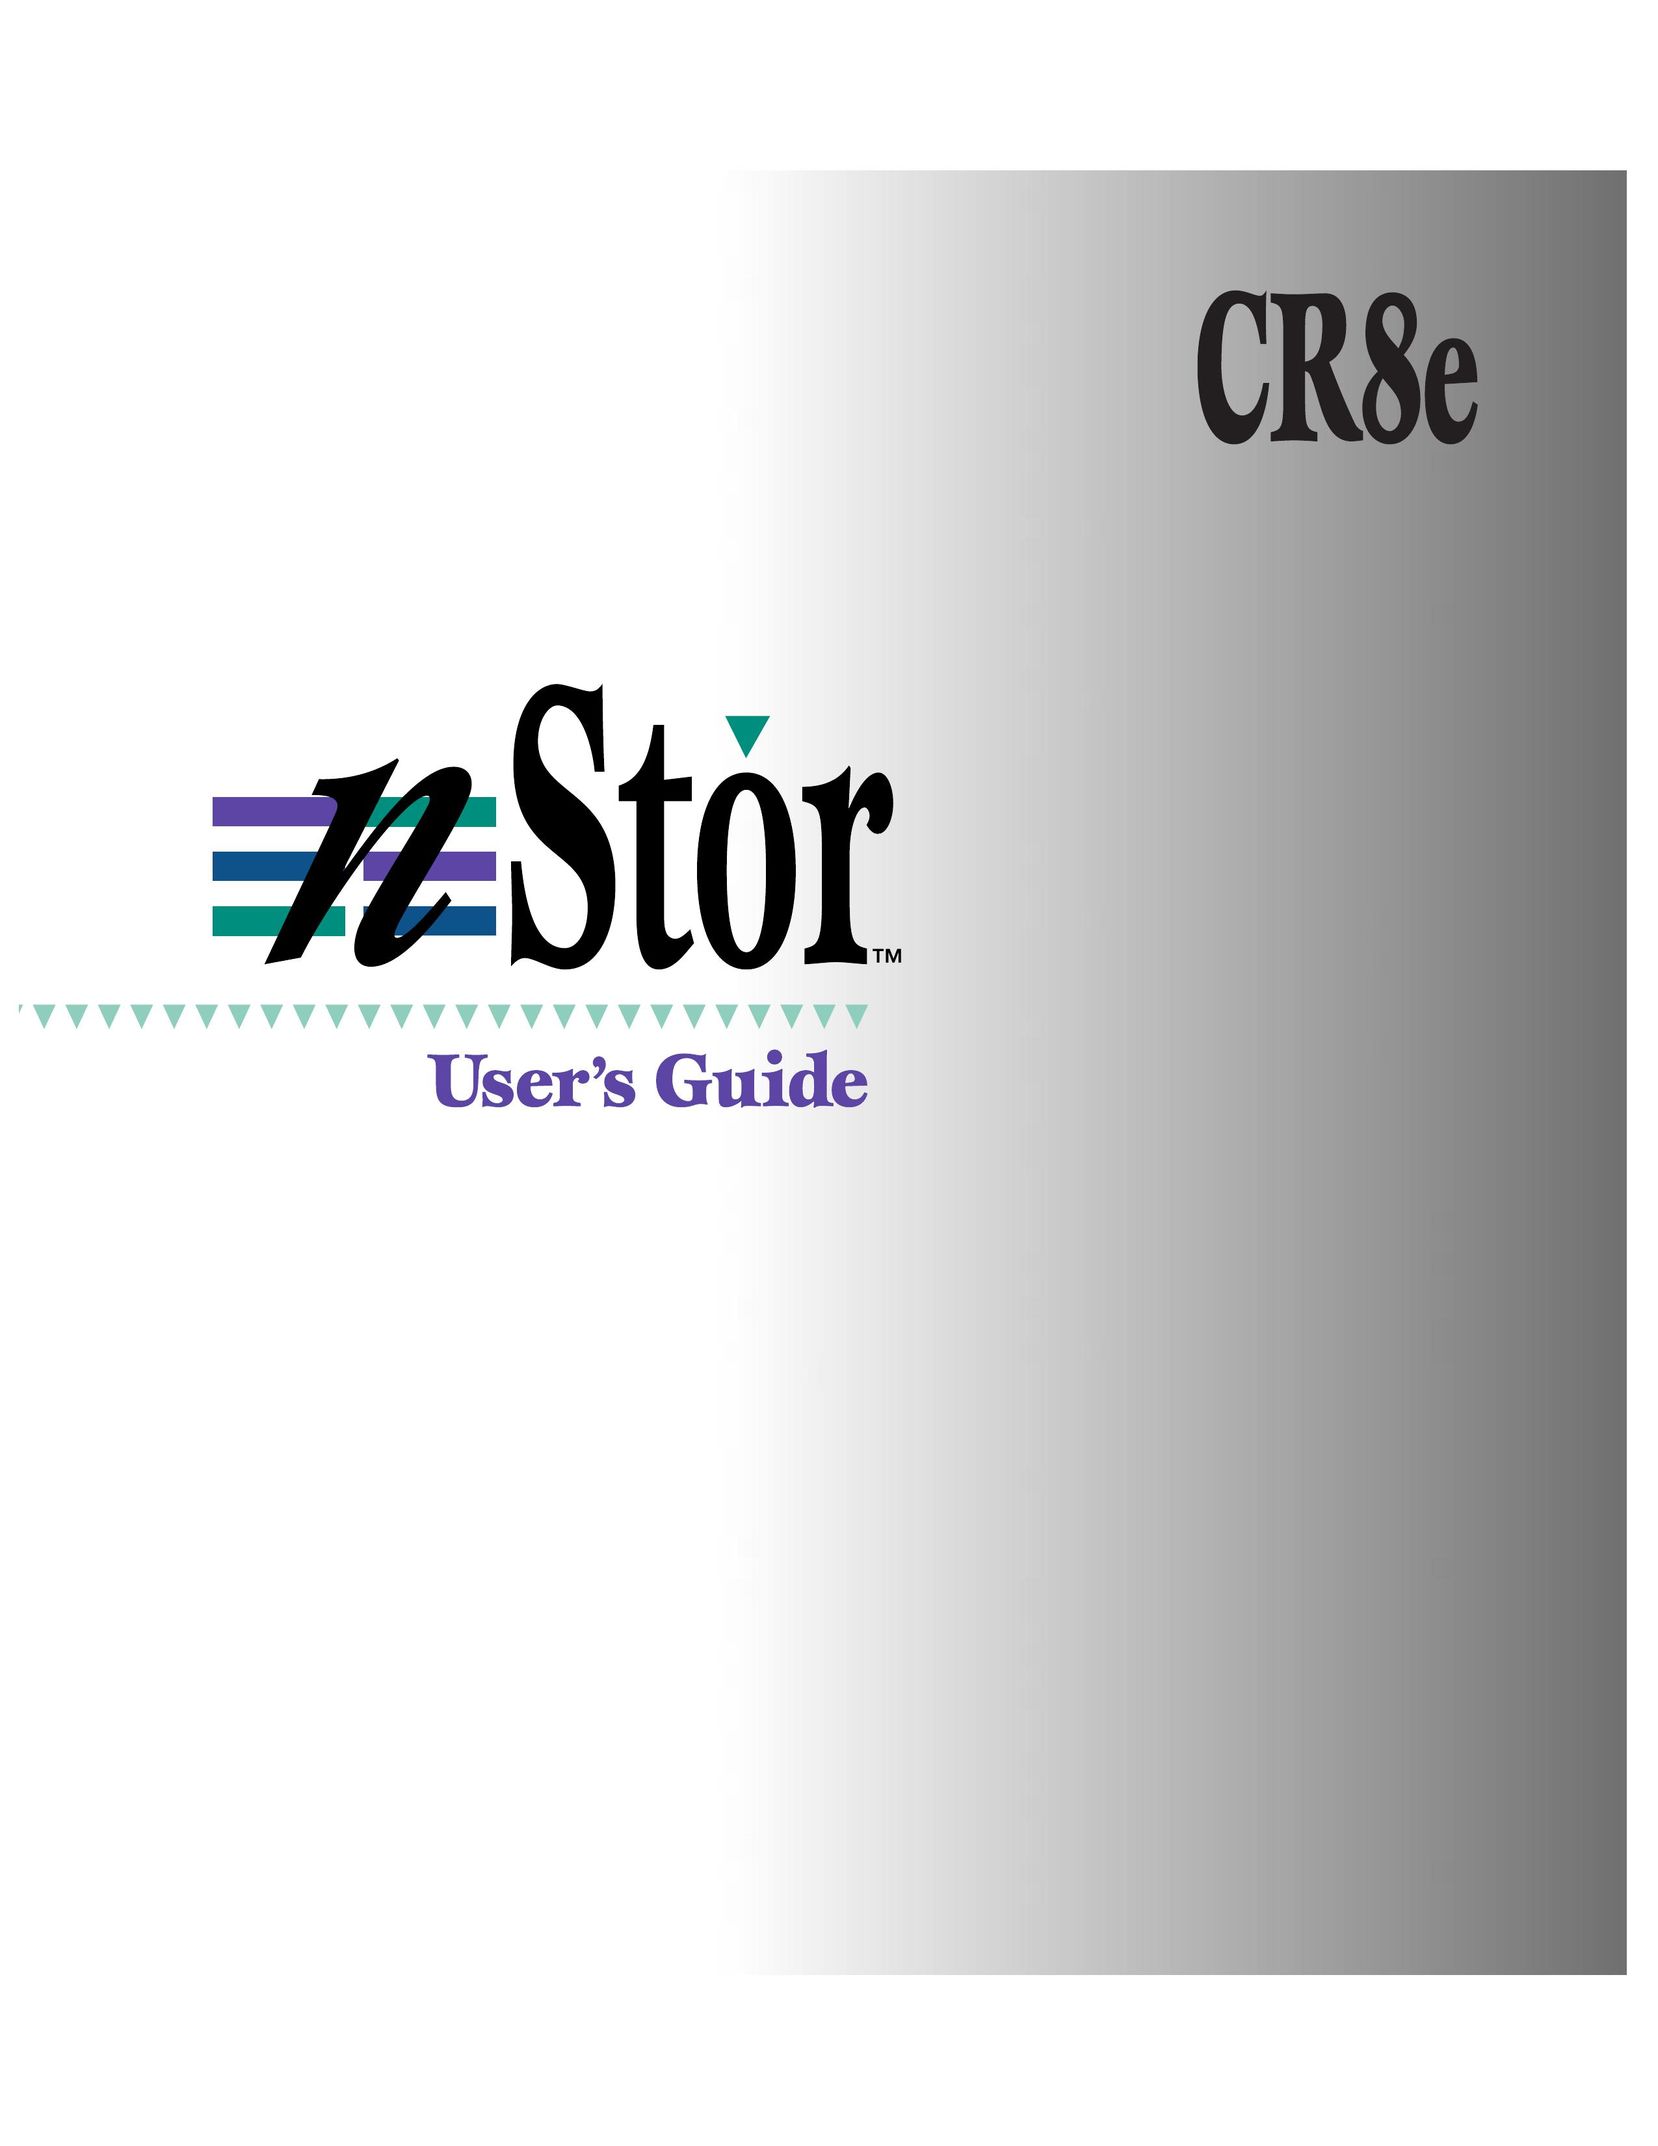 NStor Technologies CR8e Computer Hardware User Manual